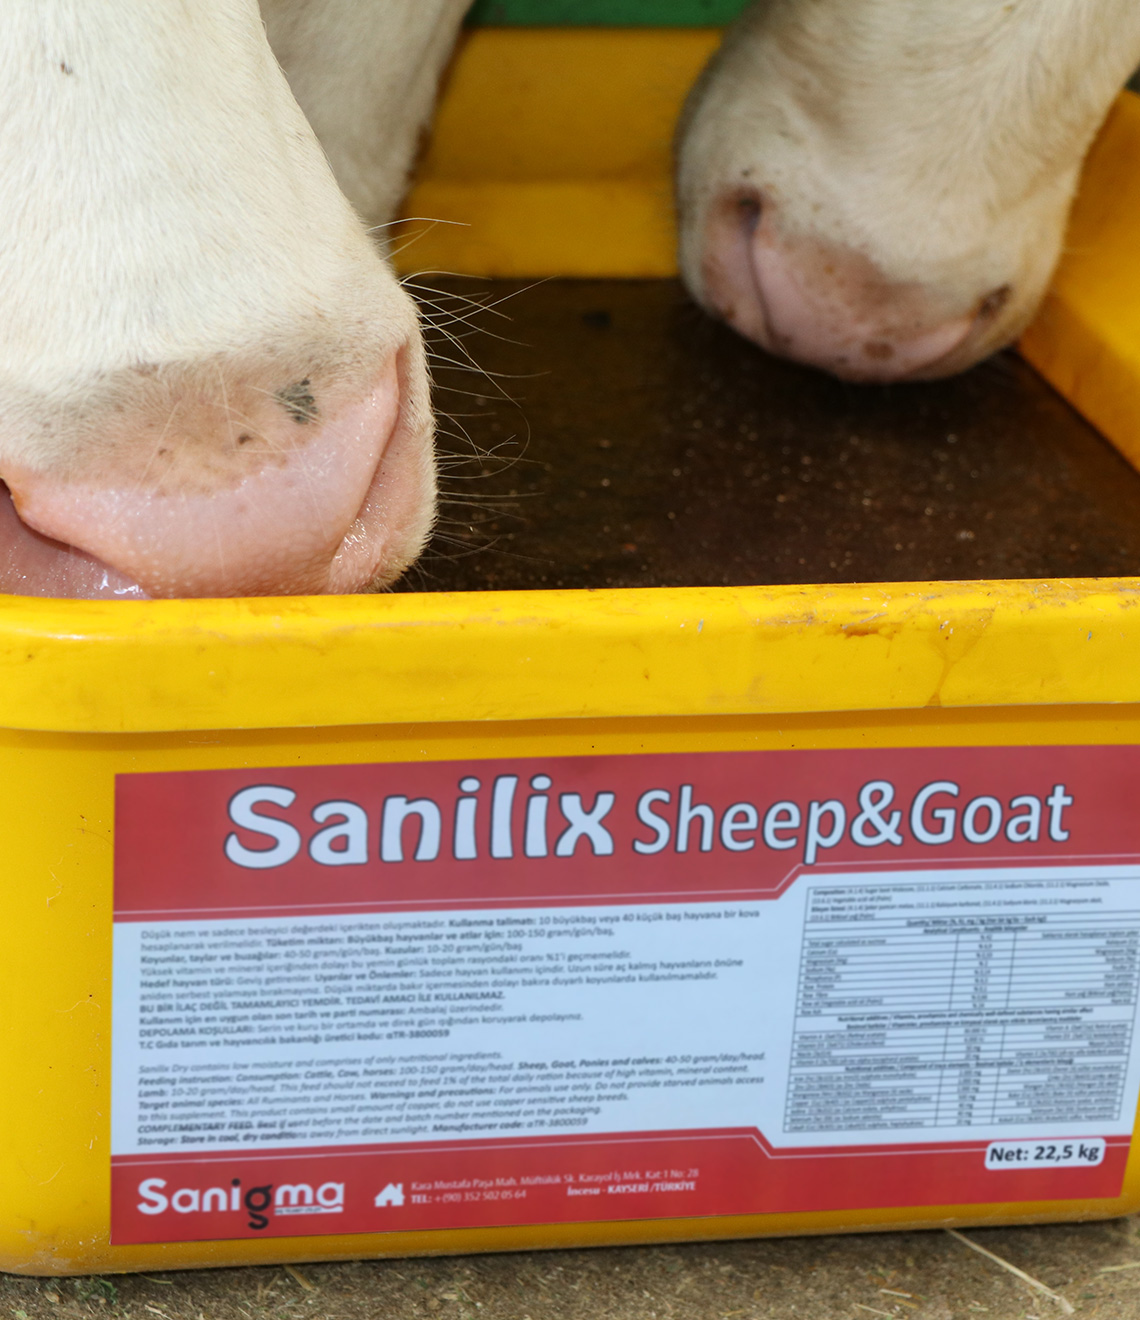 Sanilix Sheep & Goat